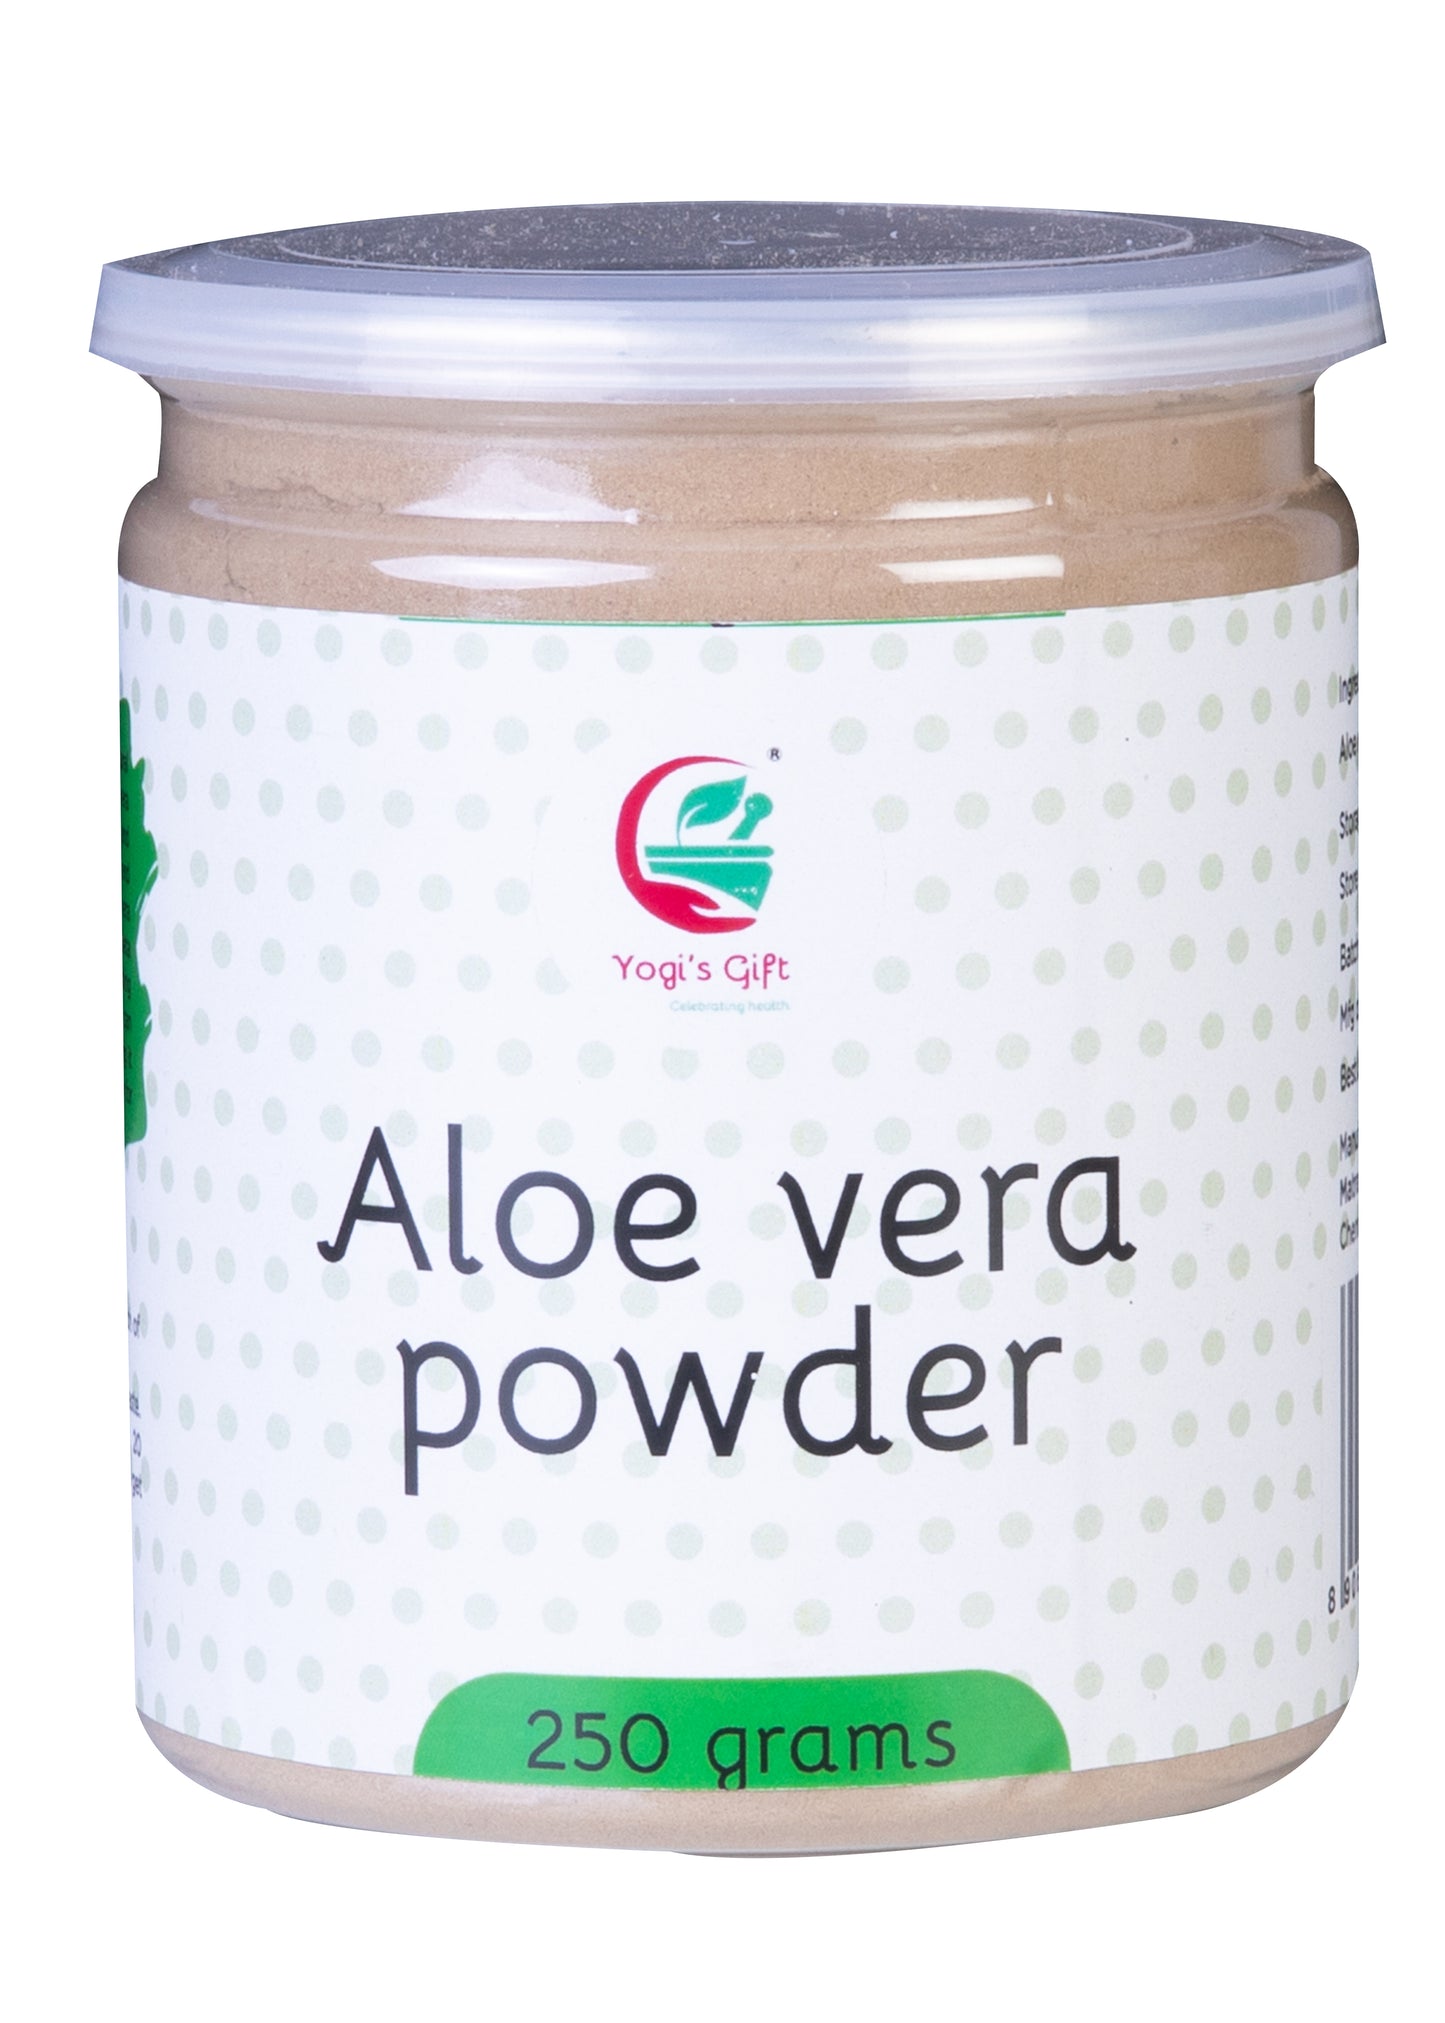 Aloe vera powder | 250 grams | Moisturizing face mask ingredient for d – Yogi's